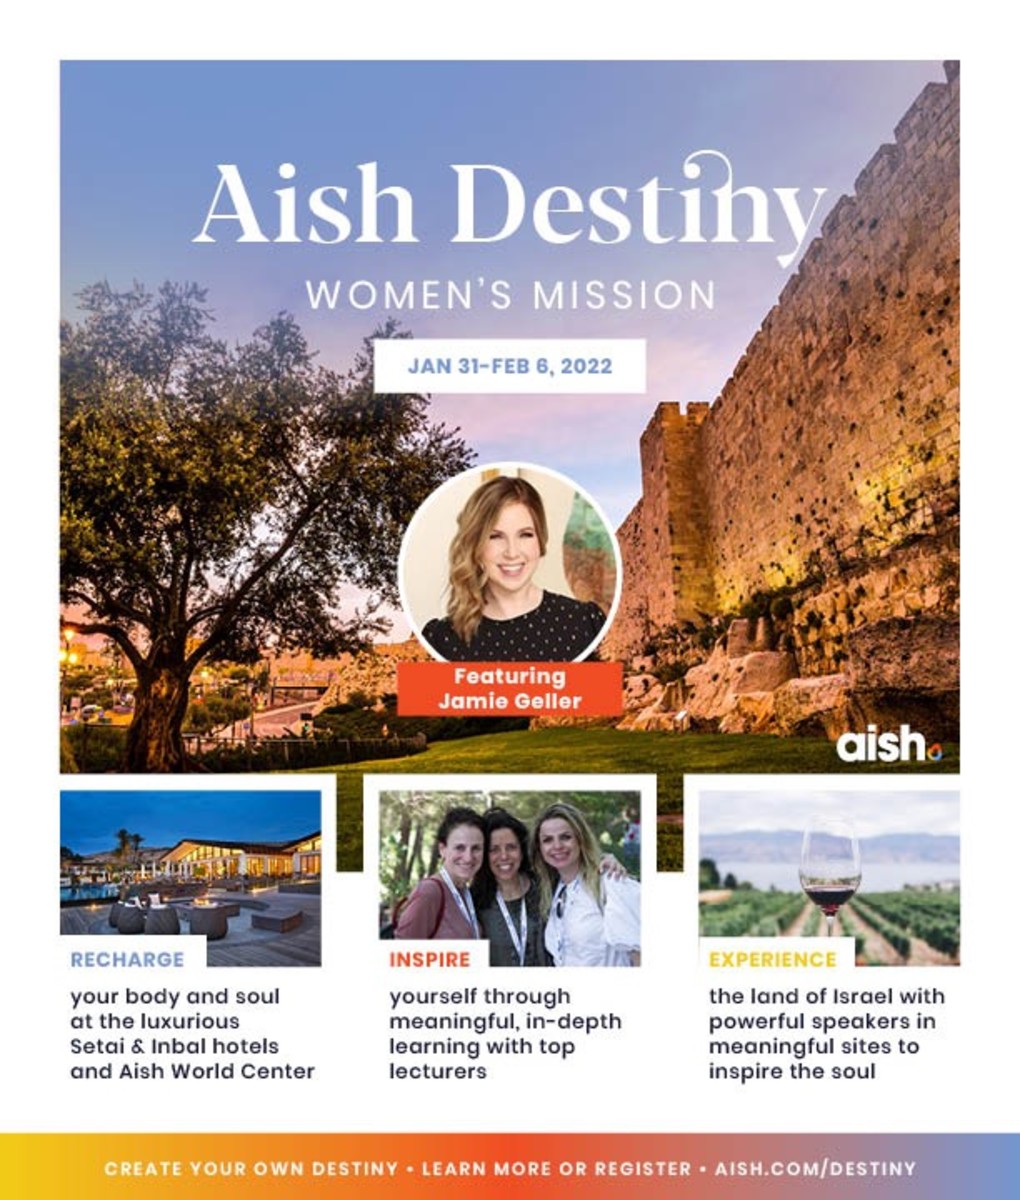 Aish destiny women's trip with jamie Geller